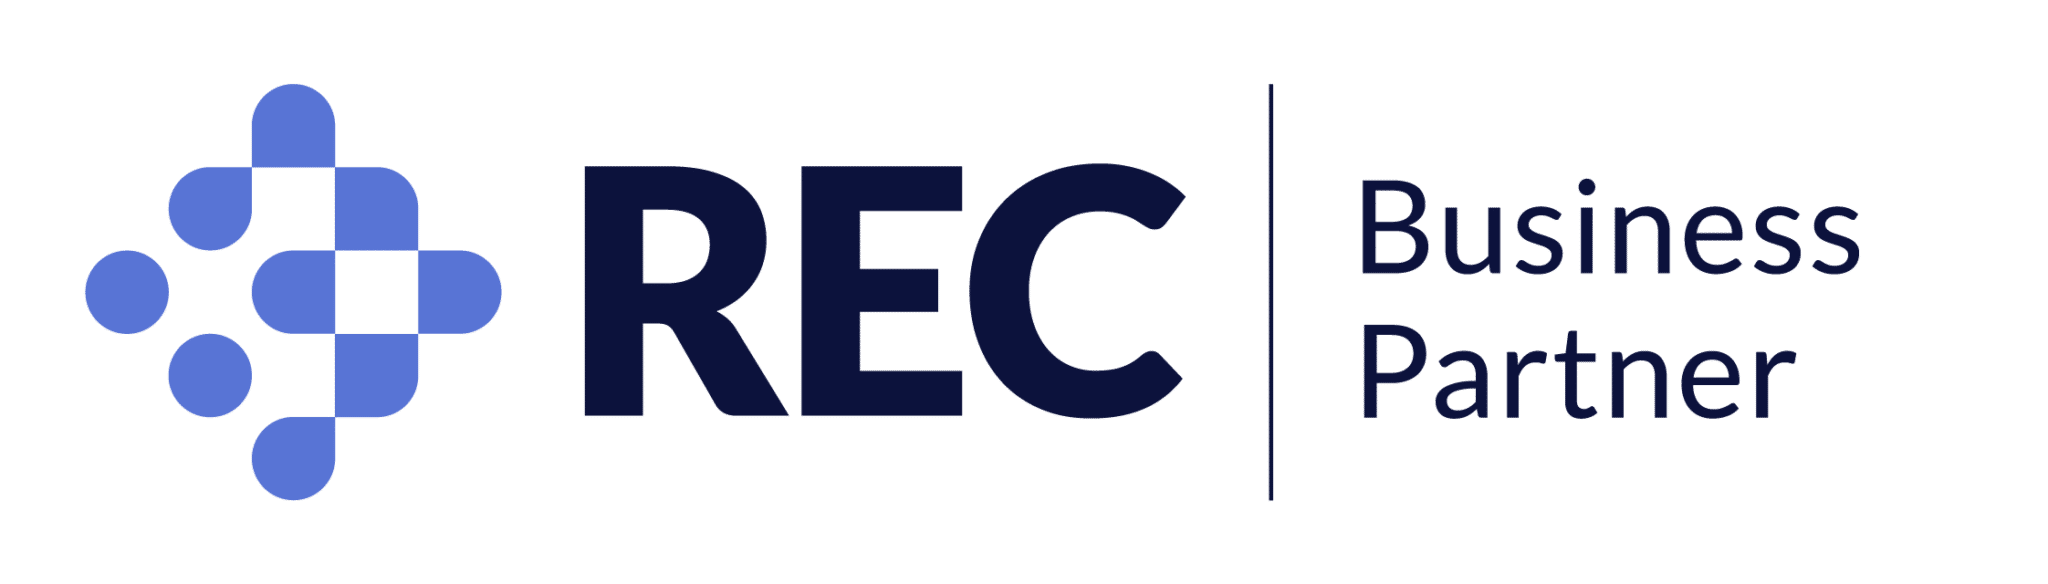 REC Business Partner logo